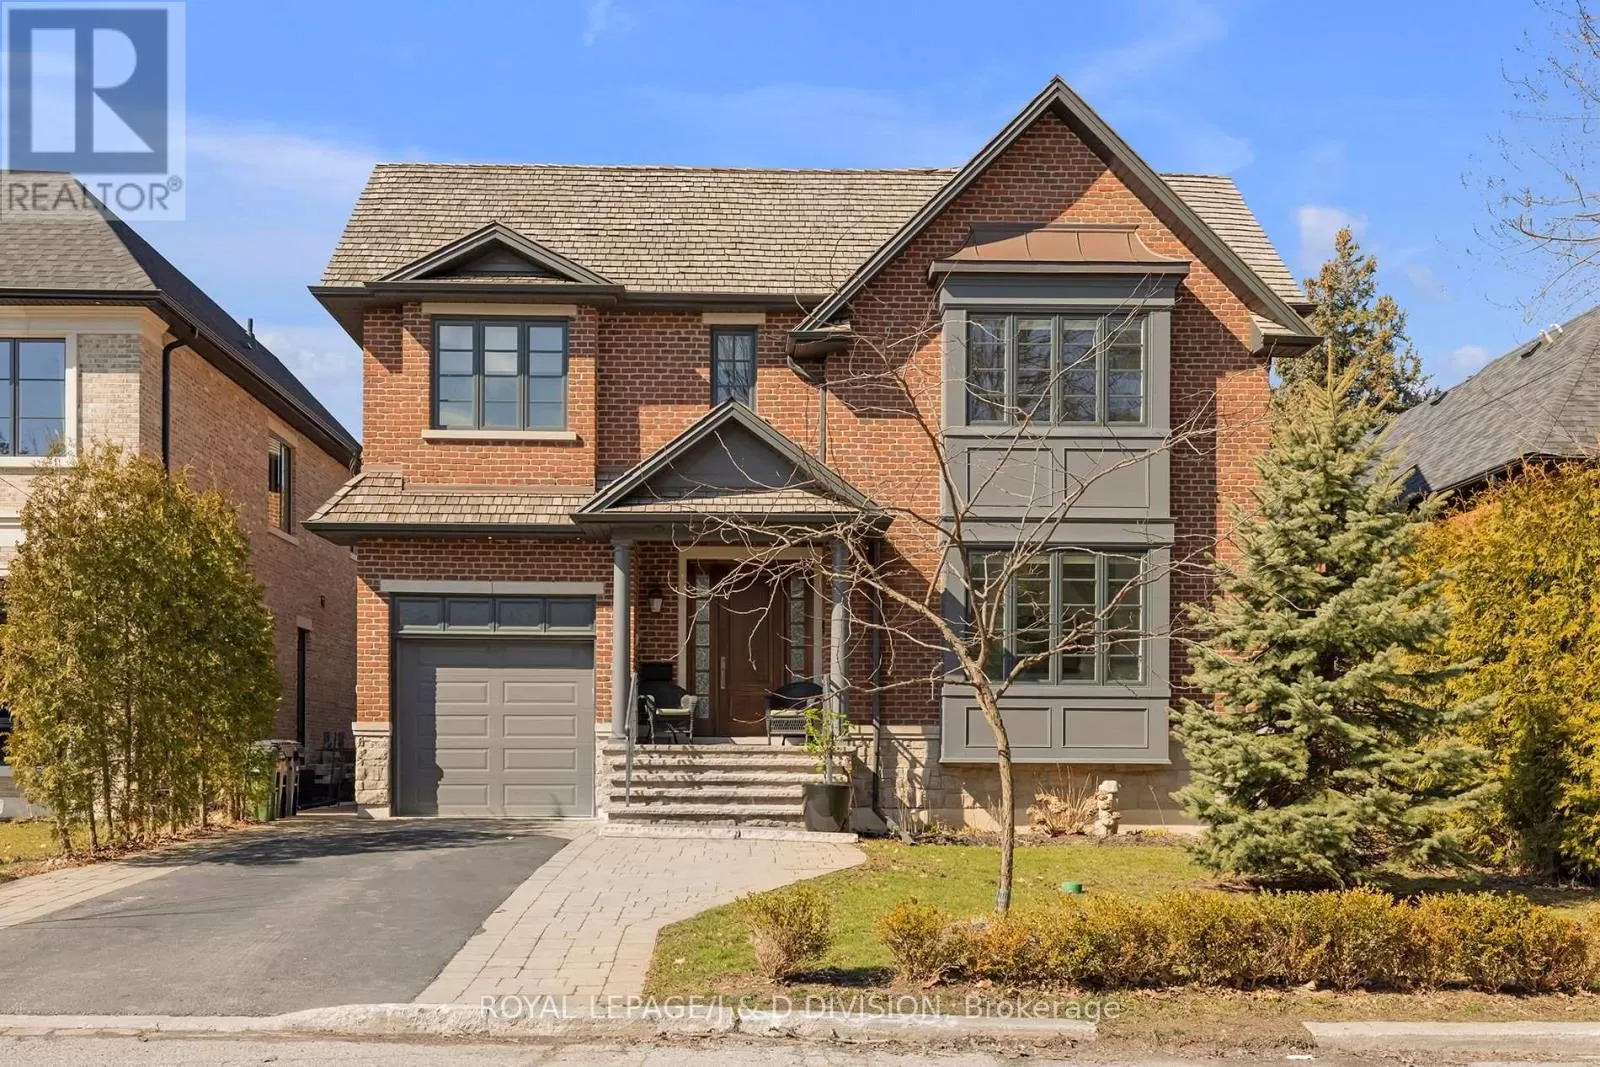 House for rent: 140 Mona Drive, Toronto, Ontario M5N 2R6